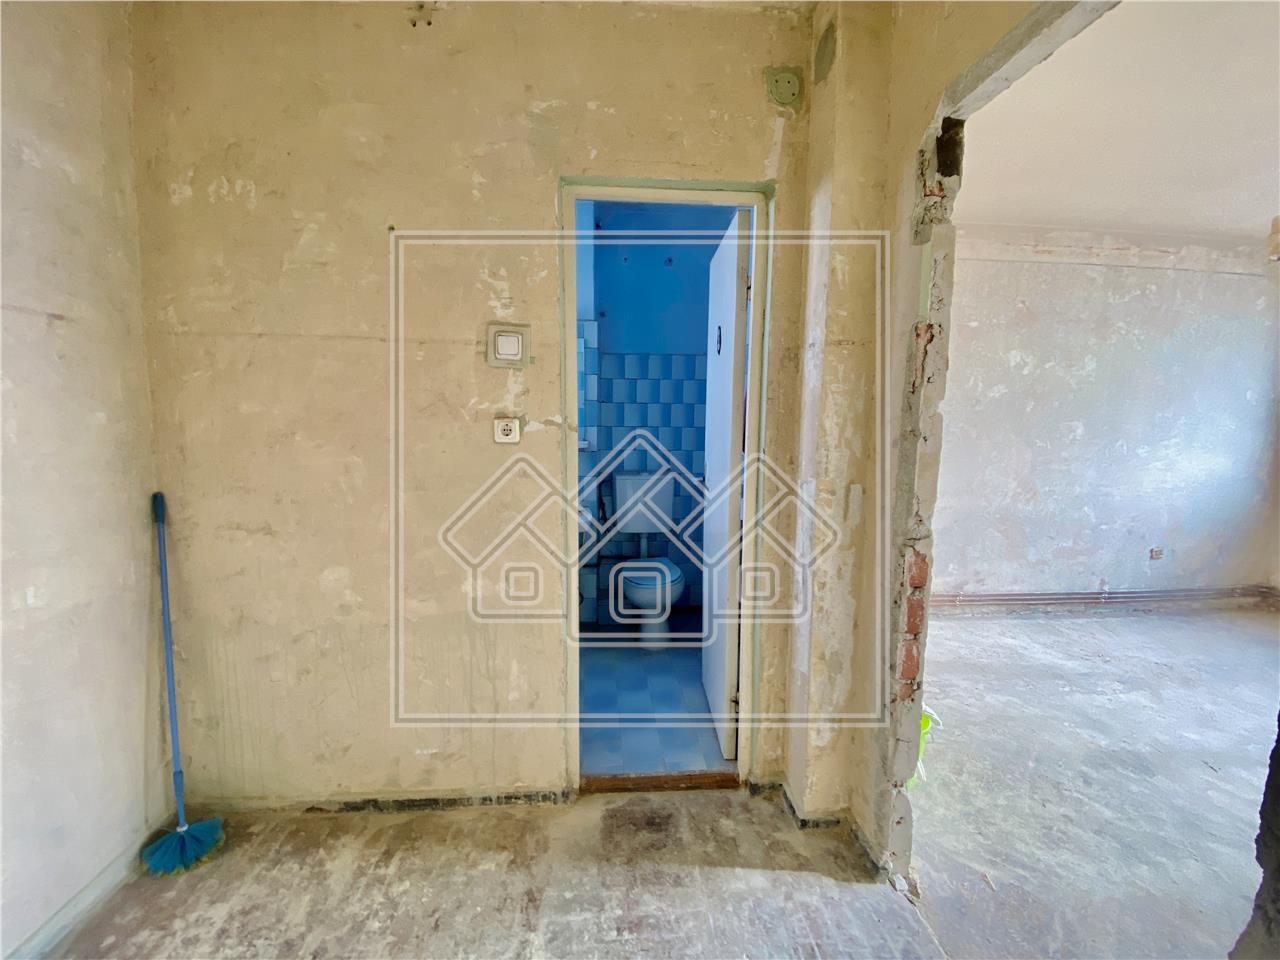 Apartament 2 rooms for sale in Sibiu - elevator - Rahovei area